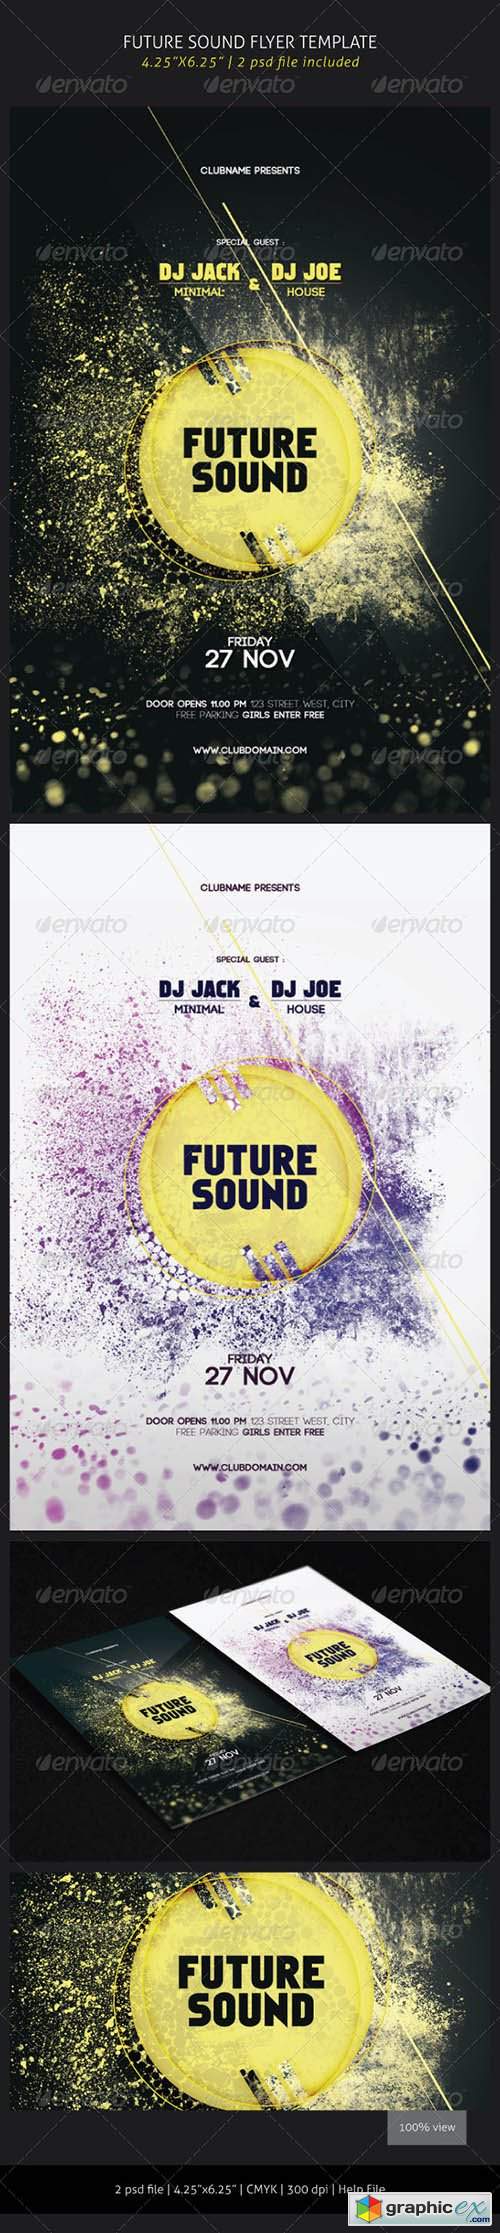  Future Sound Flyer Template 5868032